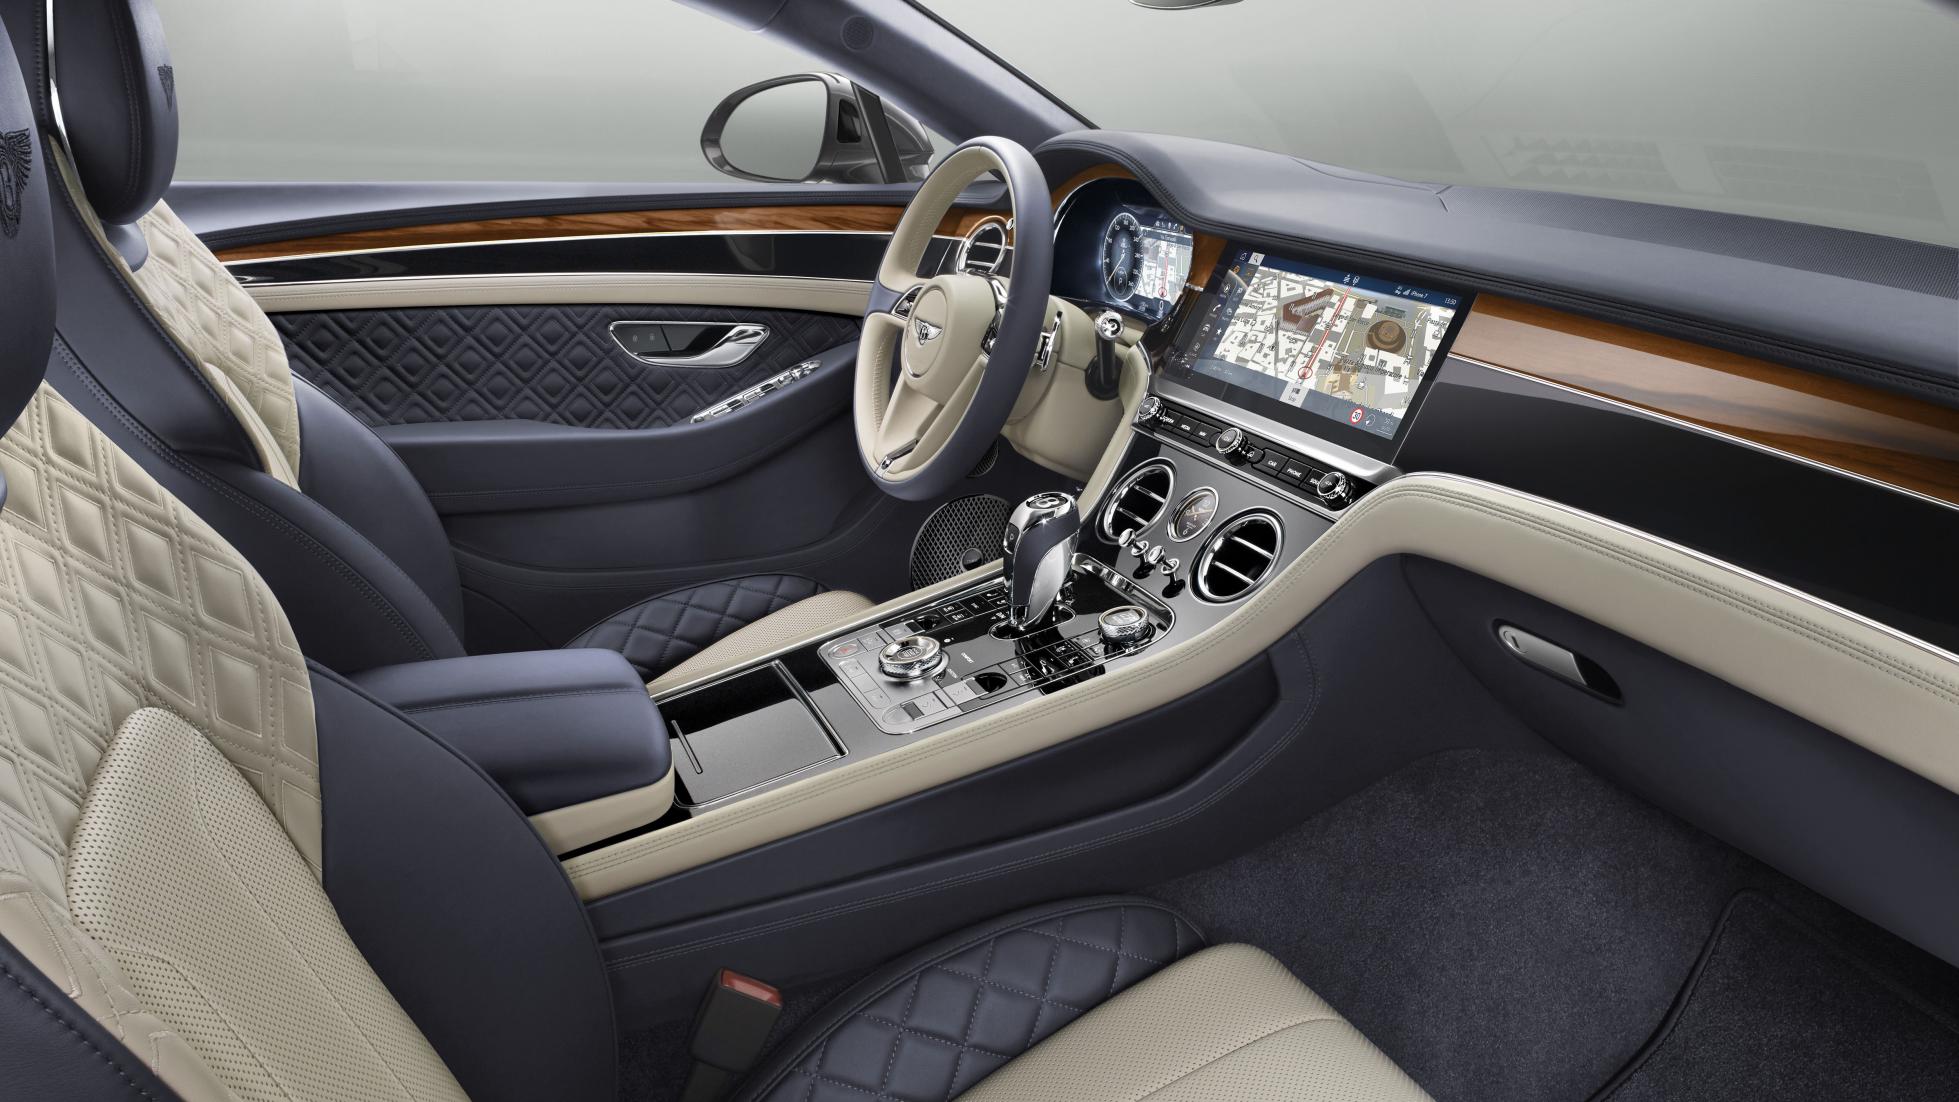 2. Bentley Continental GT – rotating dashboard